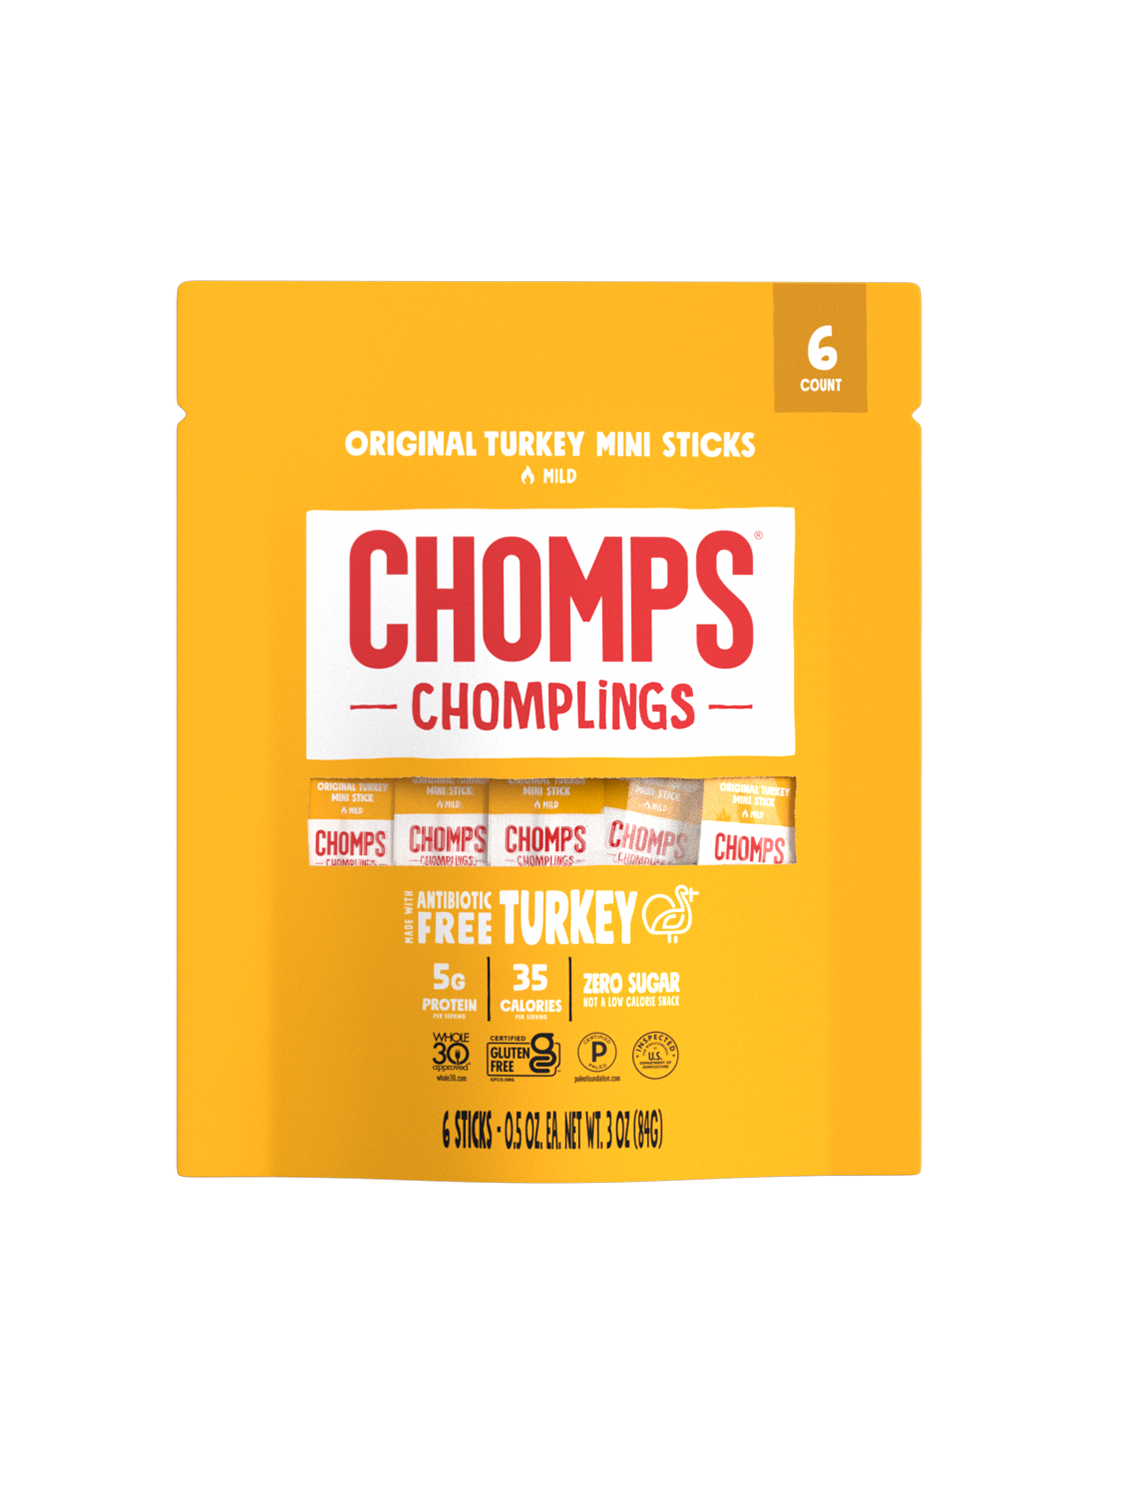 6 ct. Original Turkey Chomplings